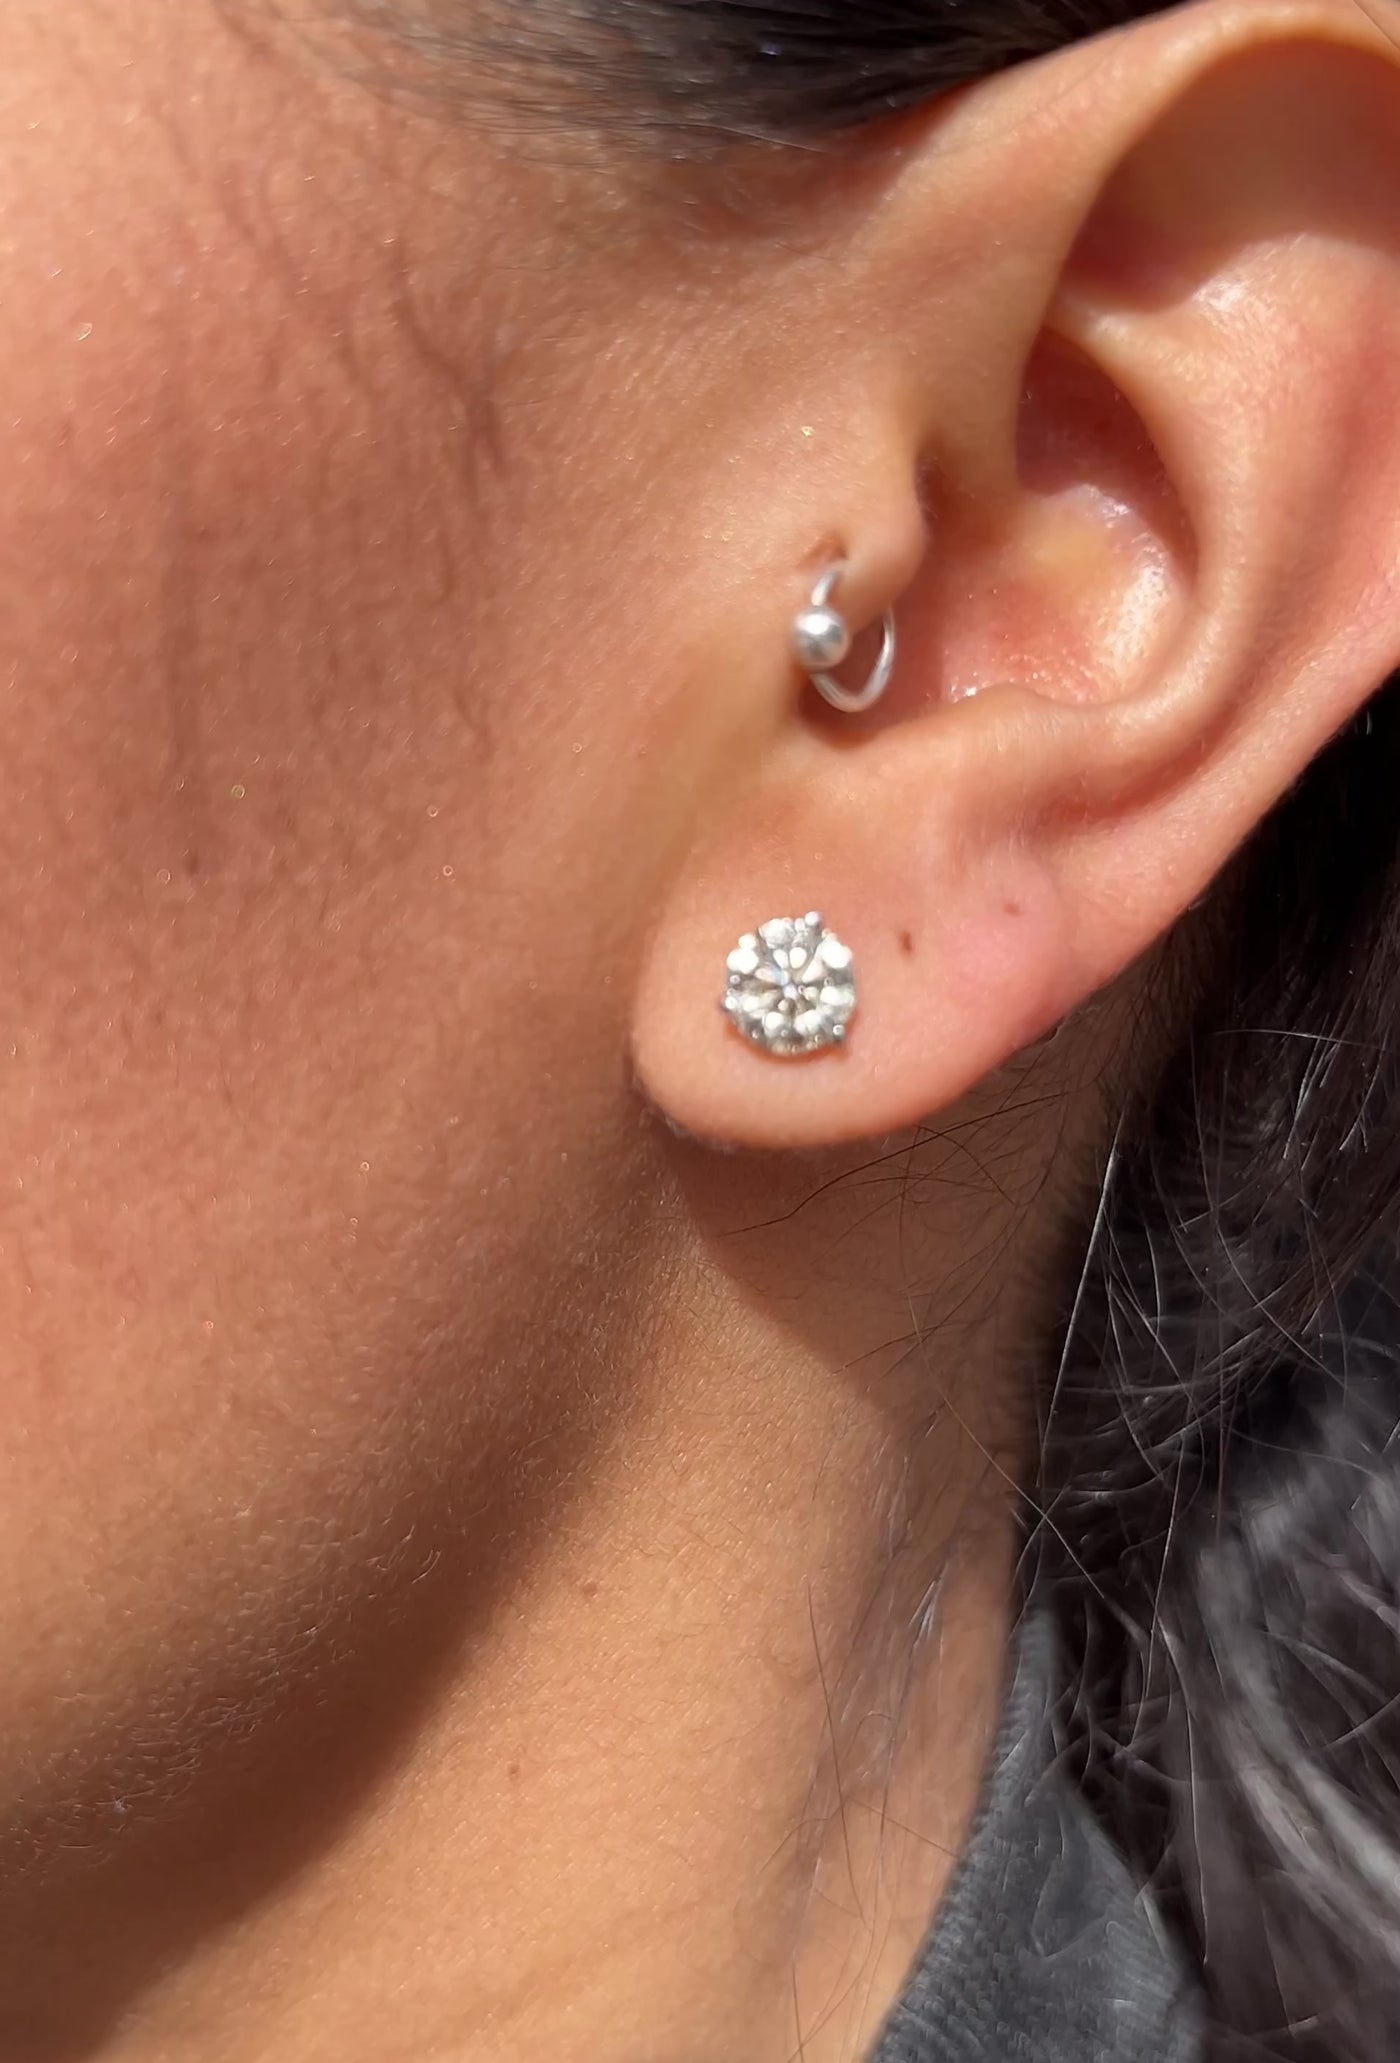 Platinum 3-Prong Round Cut Diamond Stud Earrings 2.00 ct. tw. (G-H, VS)